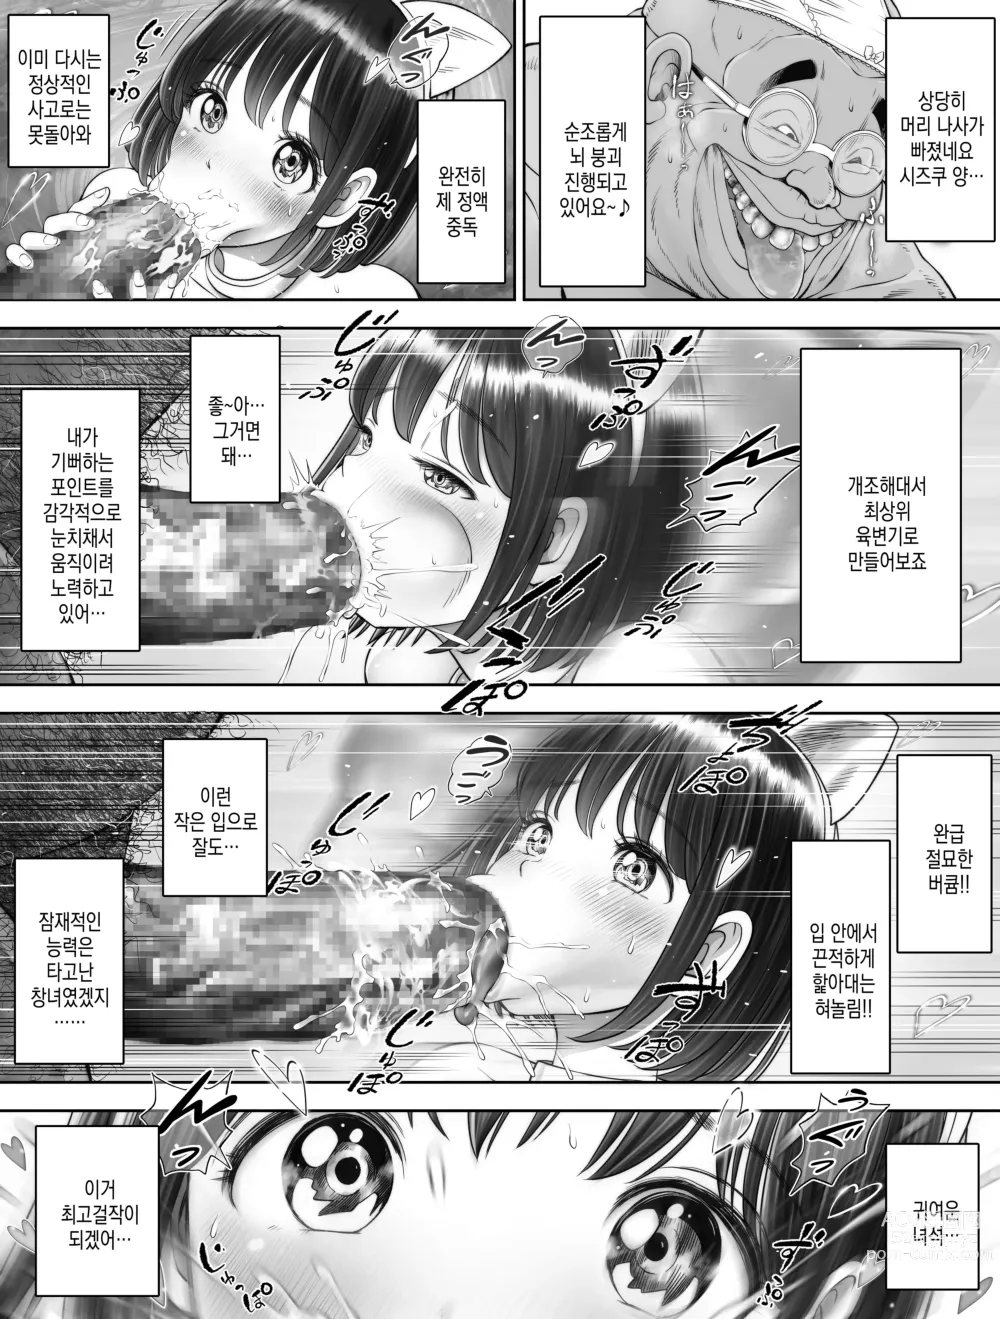 Page 16 of doujinshi 저는 매일밤 징그러운 자지가 달린 가정교사한테... 씨뿌리기 당하고있어요 3